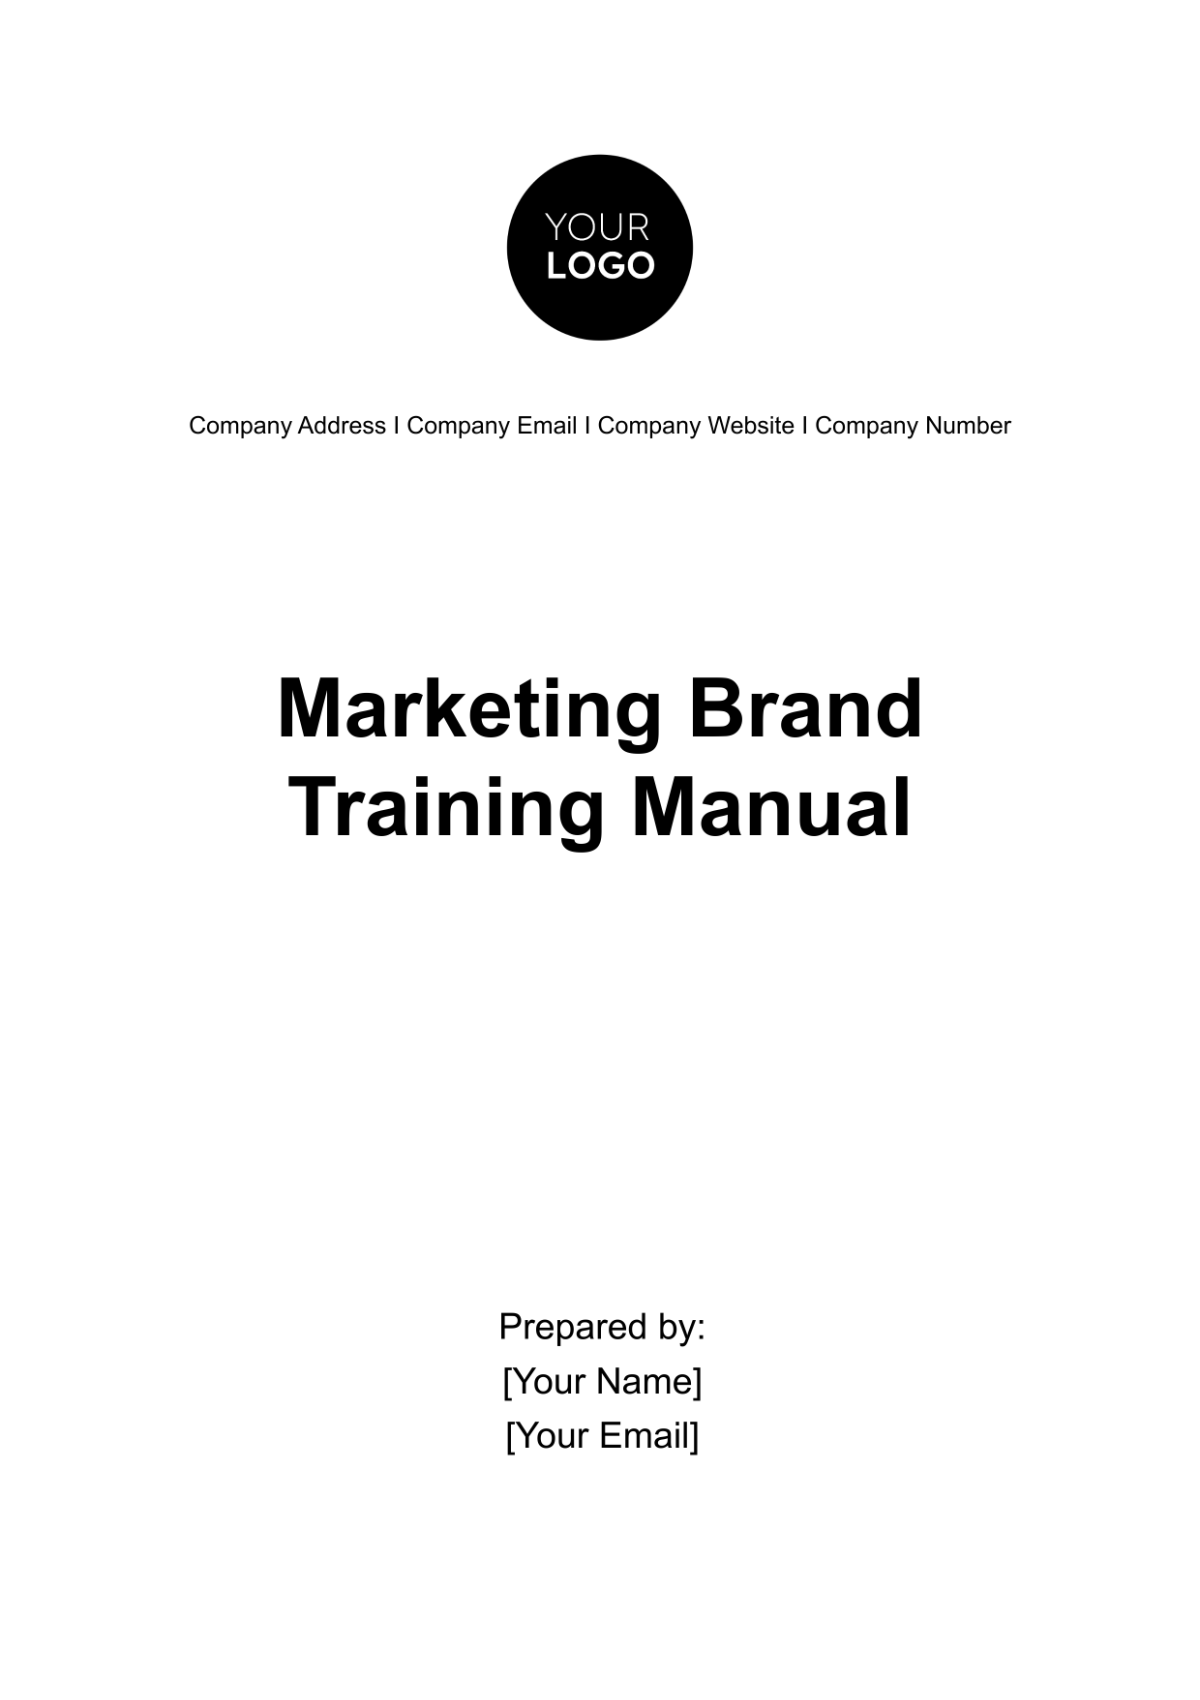 Marketing Brand Training Manual Template